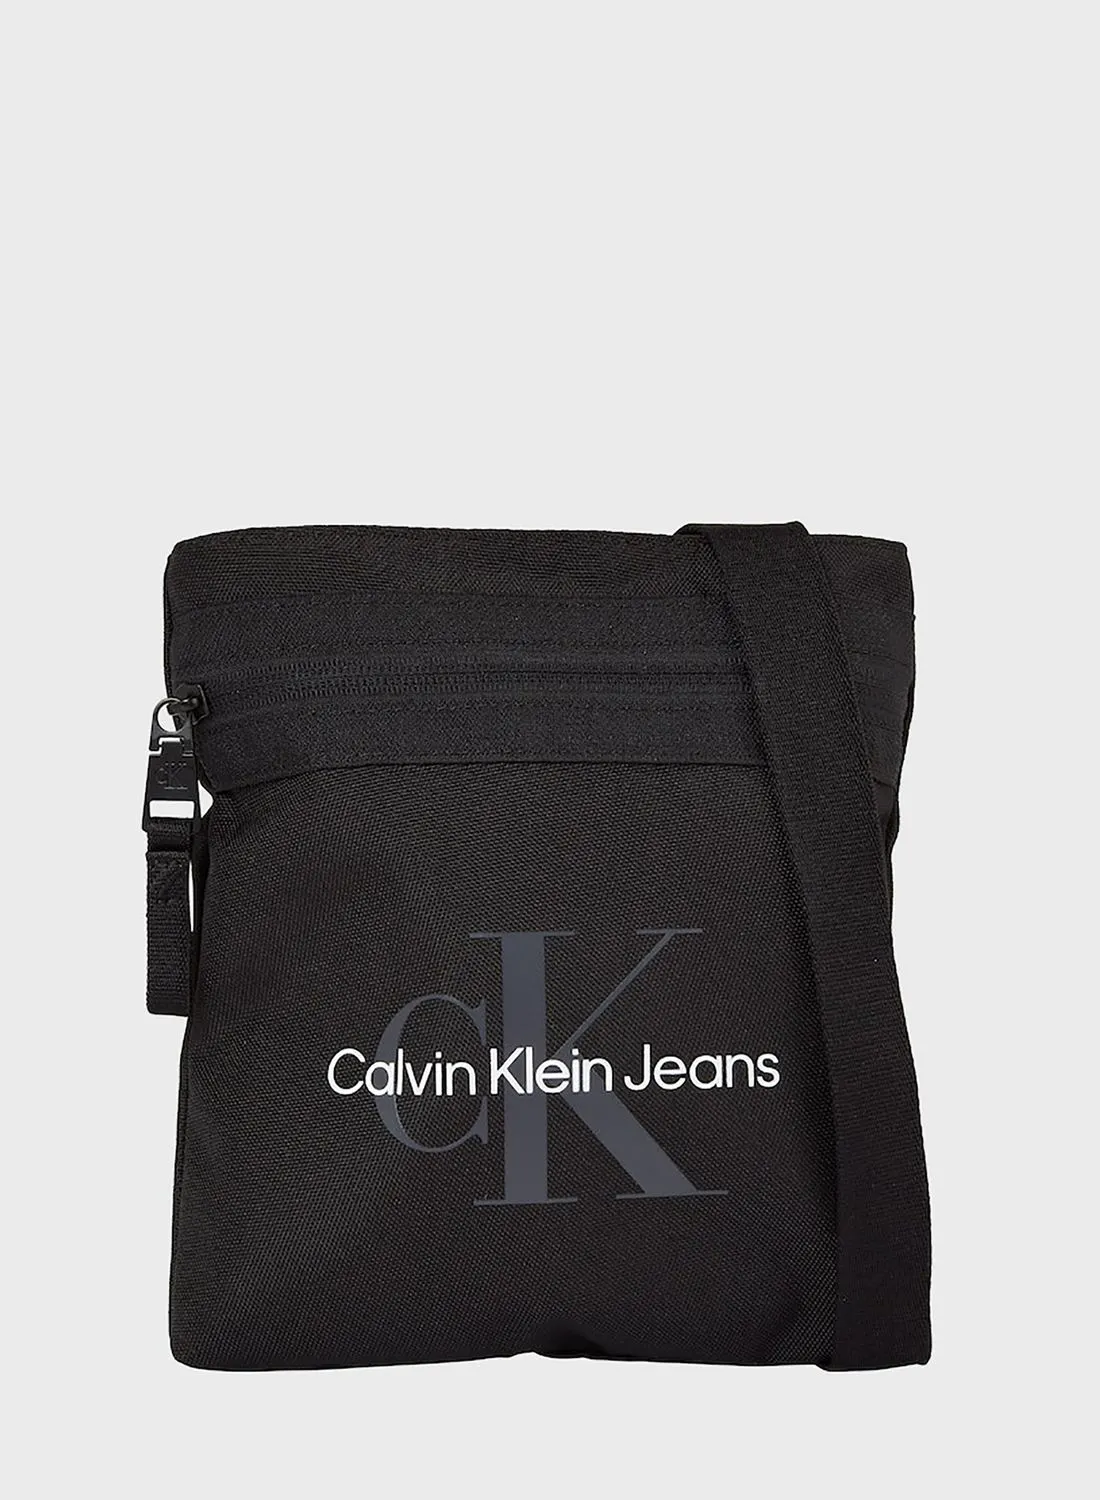 Calvin Klein Jeans Monogram Crossbody Bag